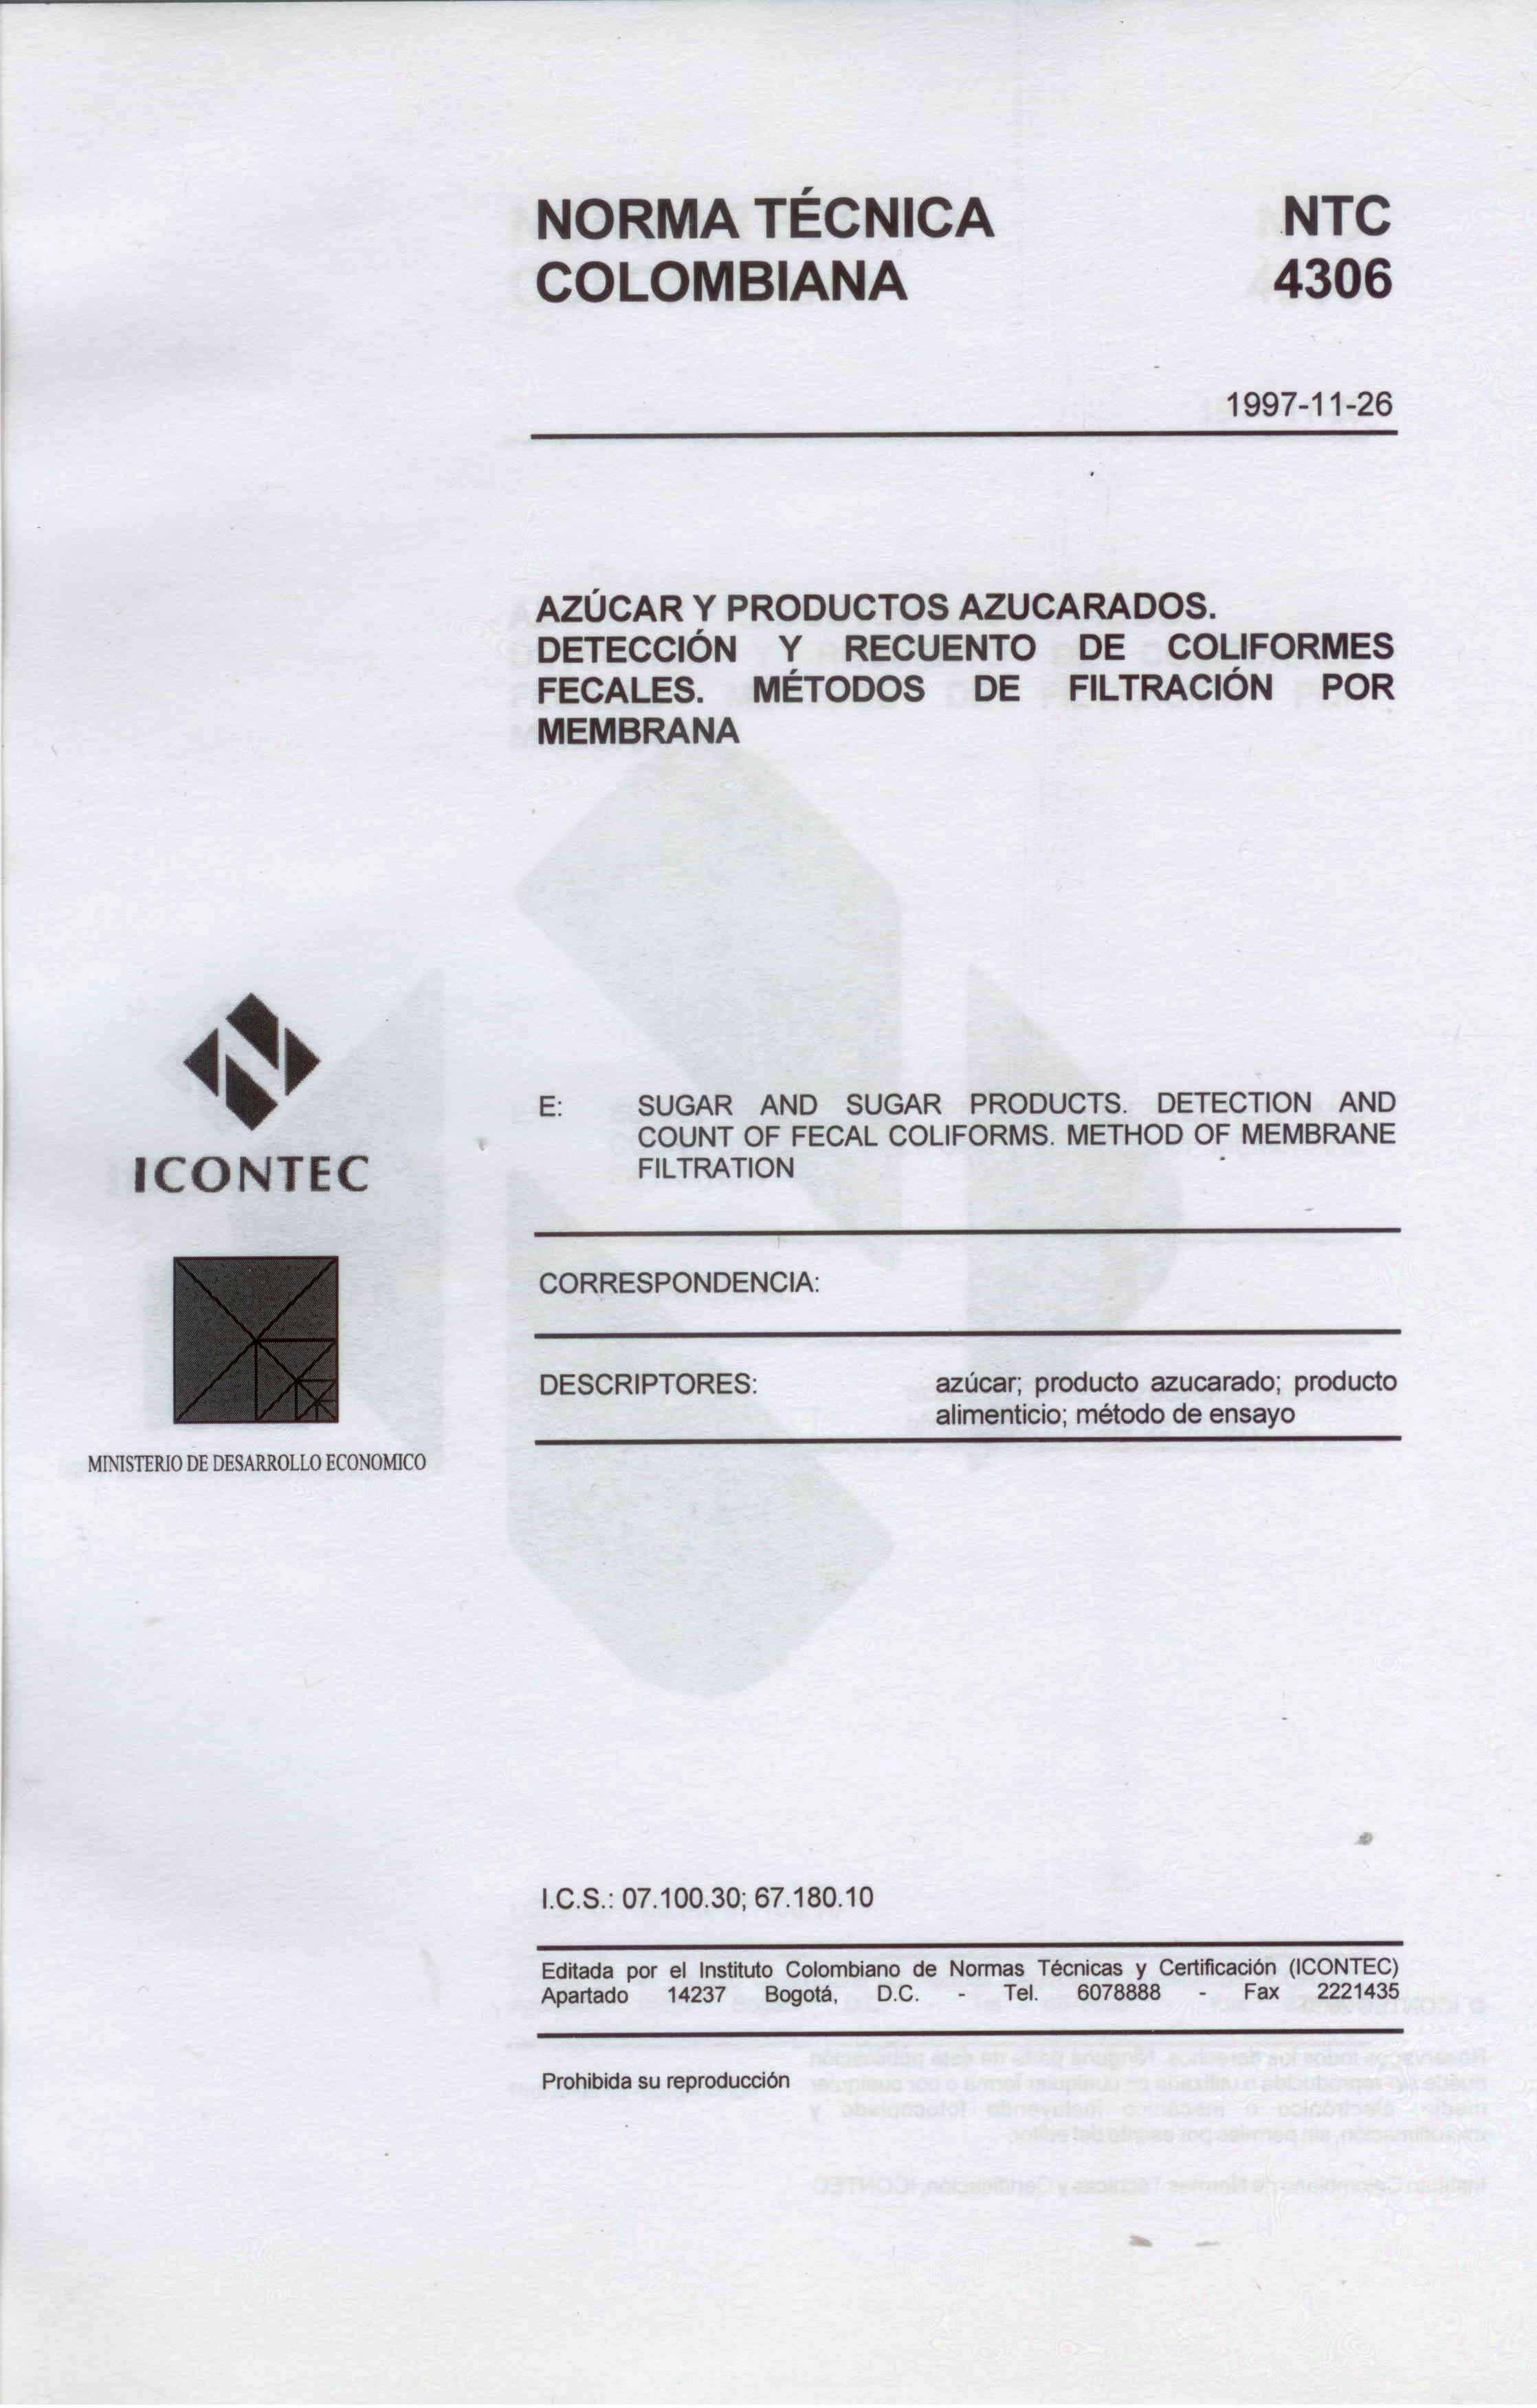 http://www.cenicana.org/investigacion/seica/imagenes_libros/2011/NTC4306/caratula.jpg